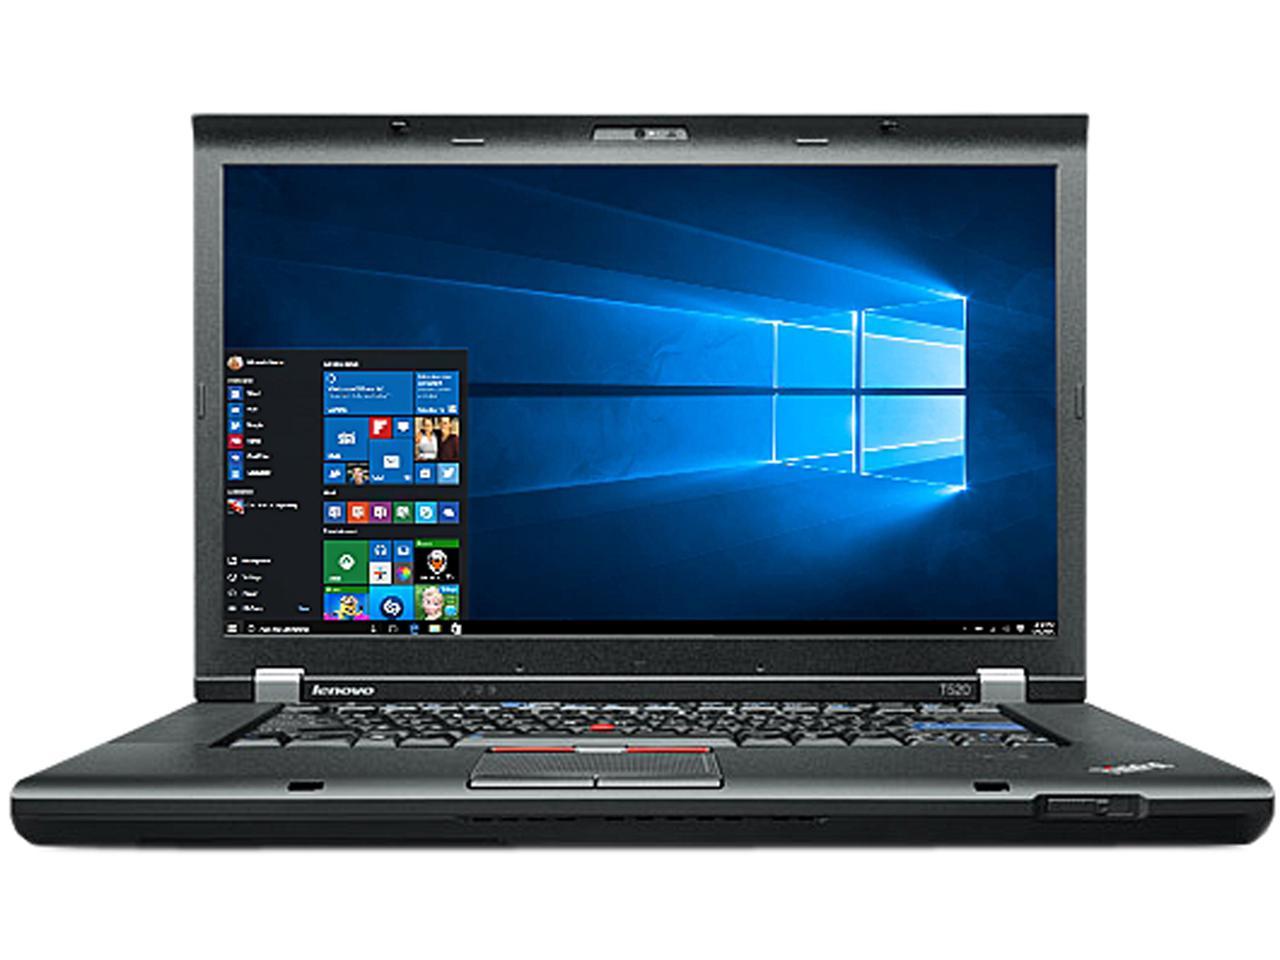 Lenovo Laptop ThinkPad T520 Intel Core i5 2nd Gen 2520M (2.50 GHz) 4 GB Memory 500 GB HDD Intel HD Graphics 3000 15.6" Windows 10 Pro